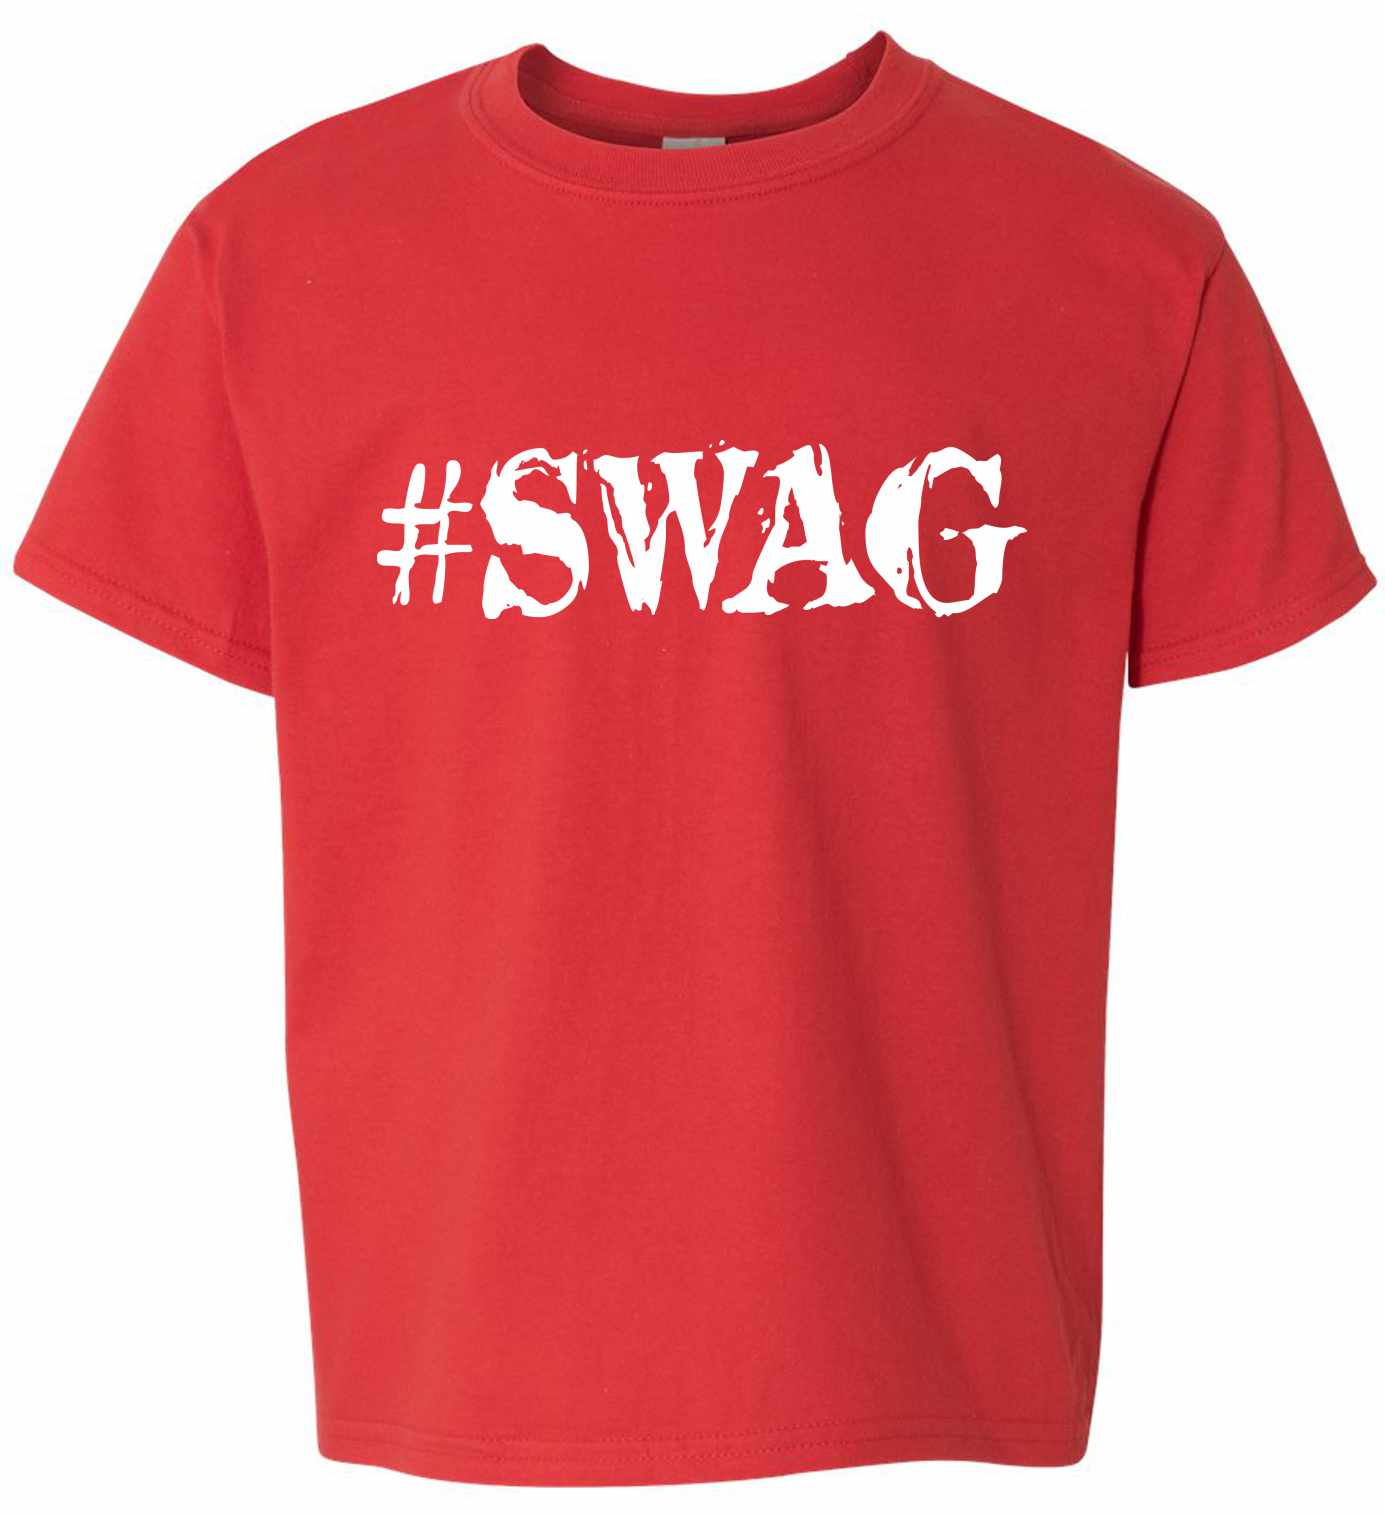 SWAG on Kids T-Shirt